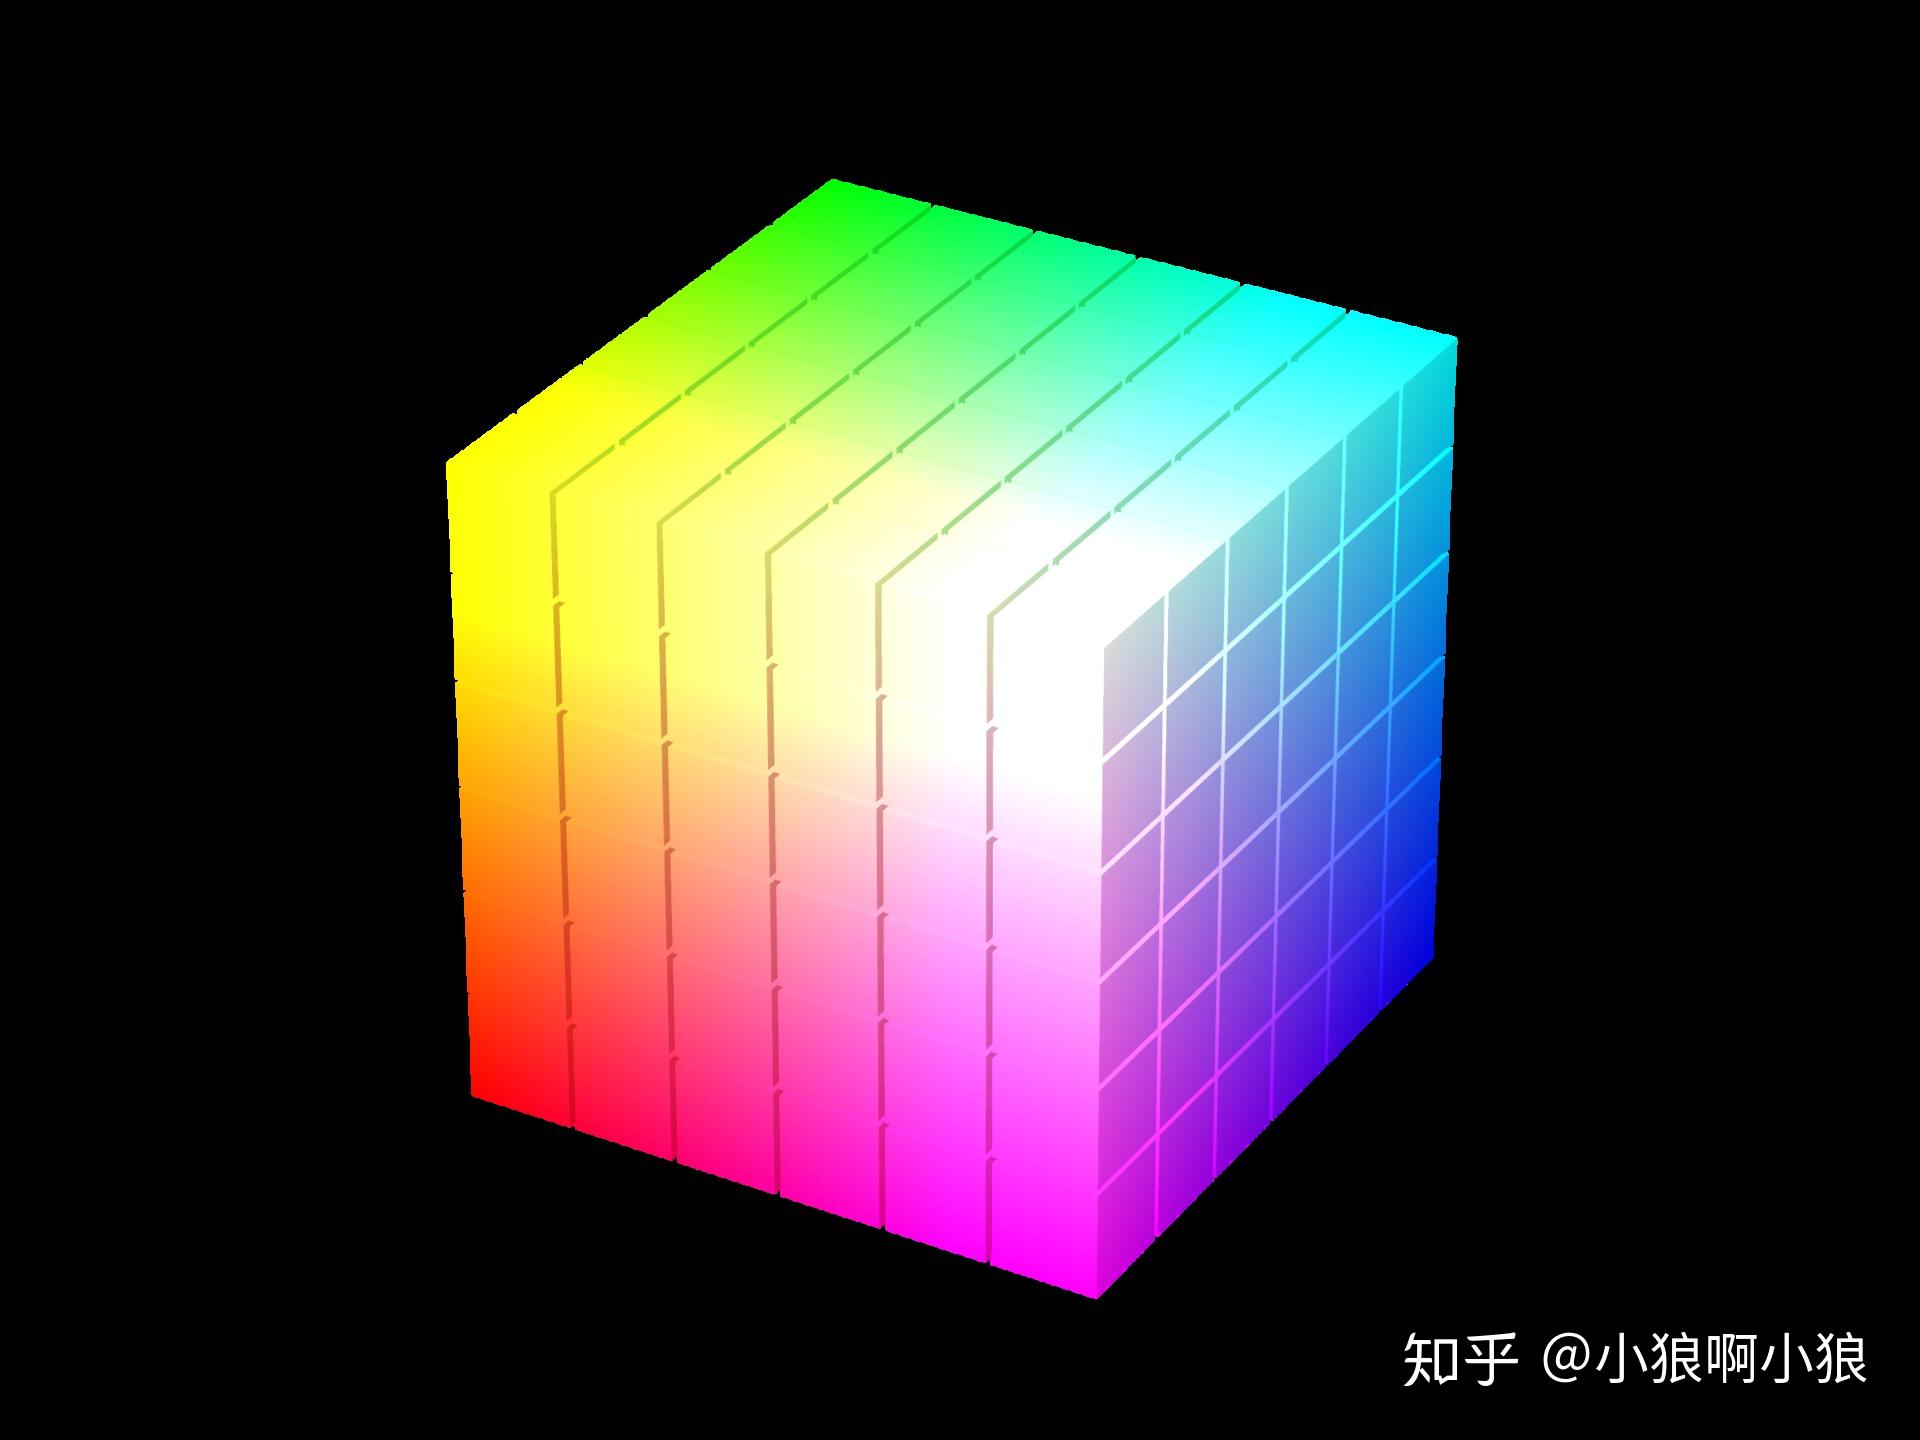 HSB RGB CMYK LAB颜色模式基本原理 - 知乎